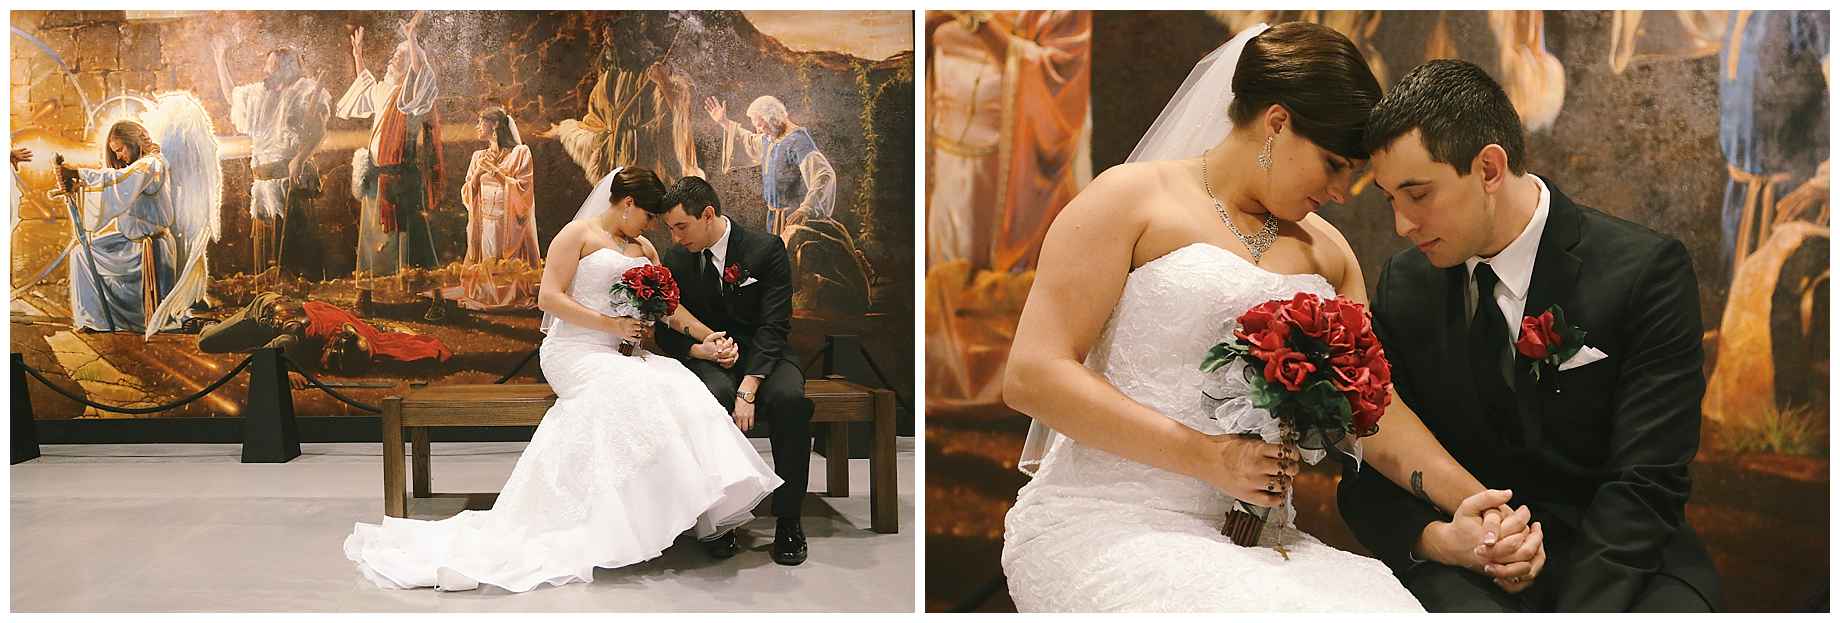 museum-of-biblical-art-wedding-photos-05